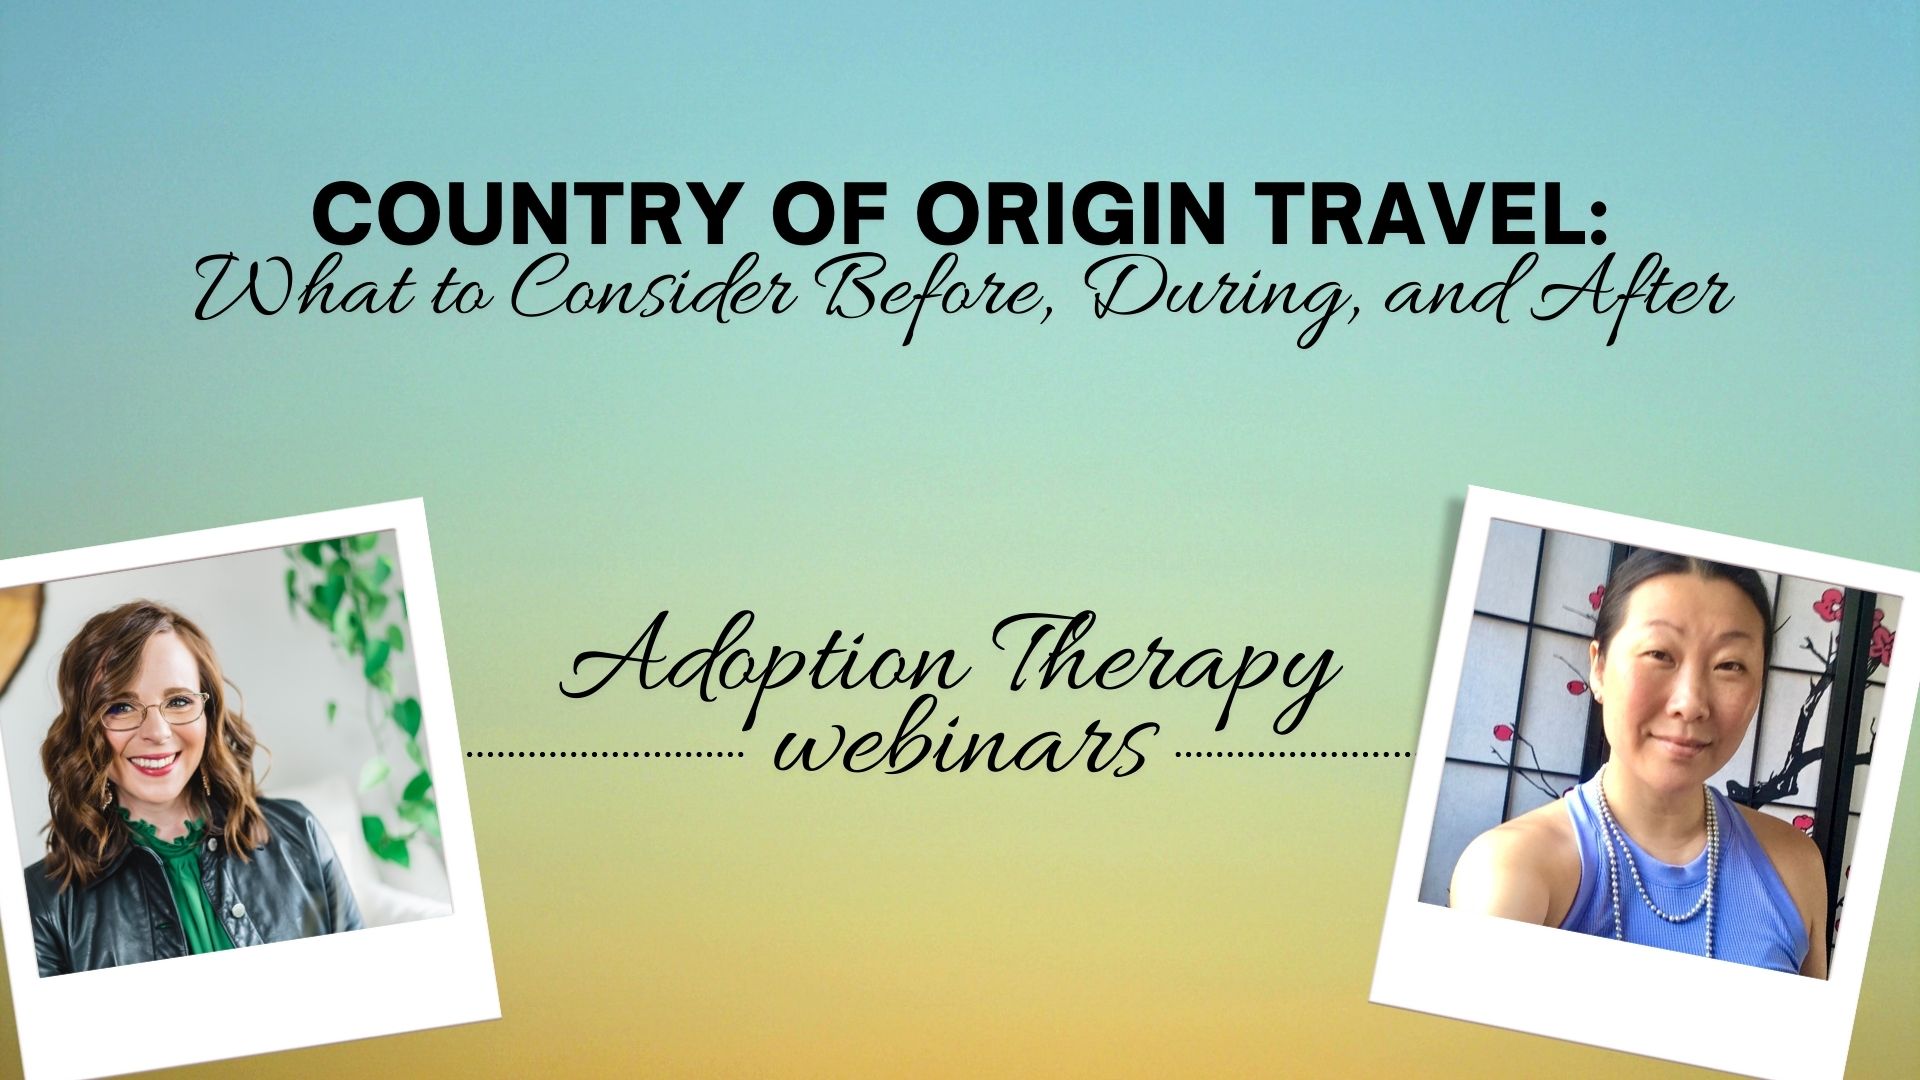 nam holtz country of origin travel adoption therapy webinar